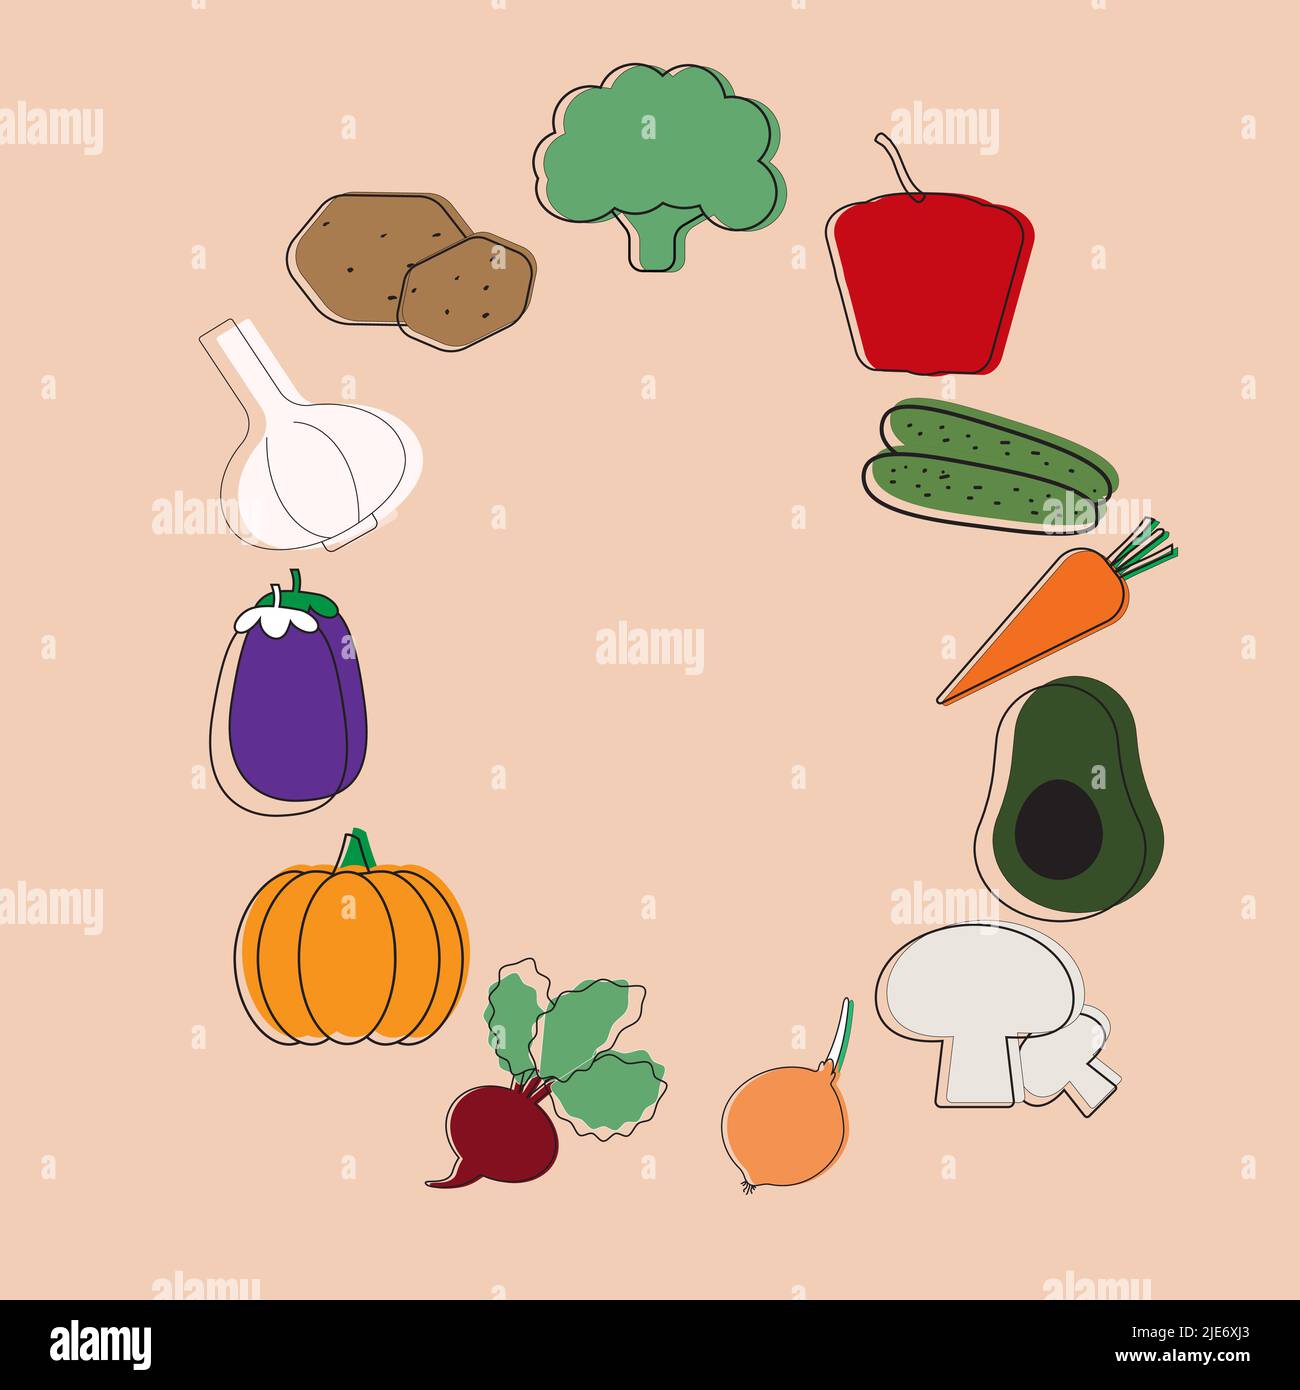 Gesunde Ernährung Gemüse Linie Symbole. Vektorgrafik. Gruppe von Gemüse, gesunde Ernährung Konzept. Stock Vektor